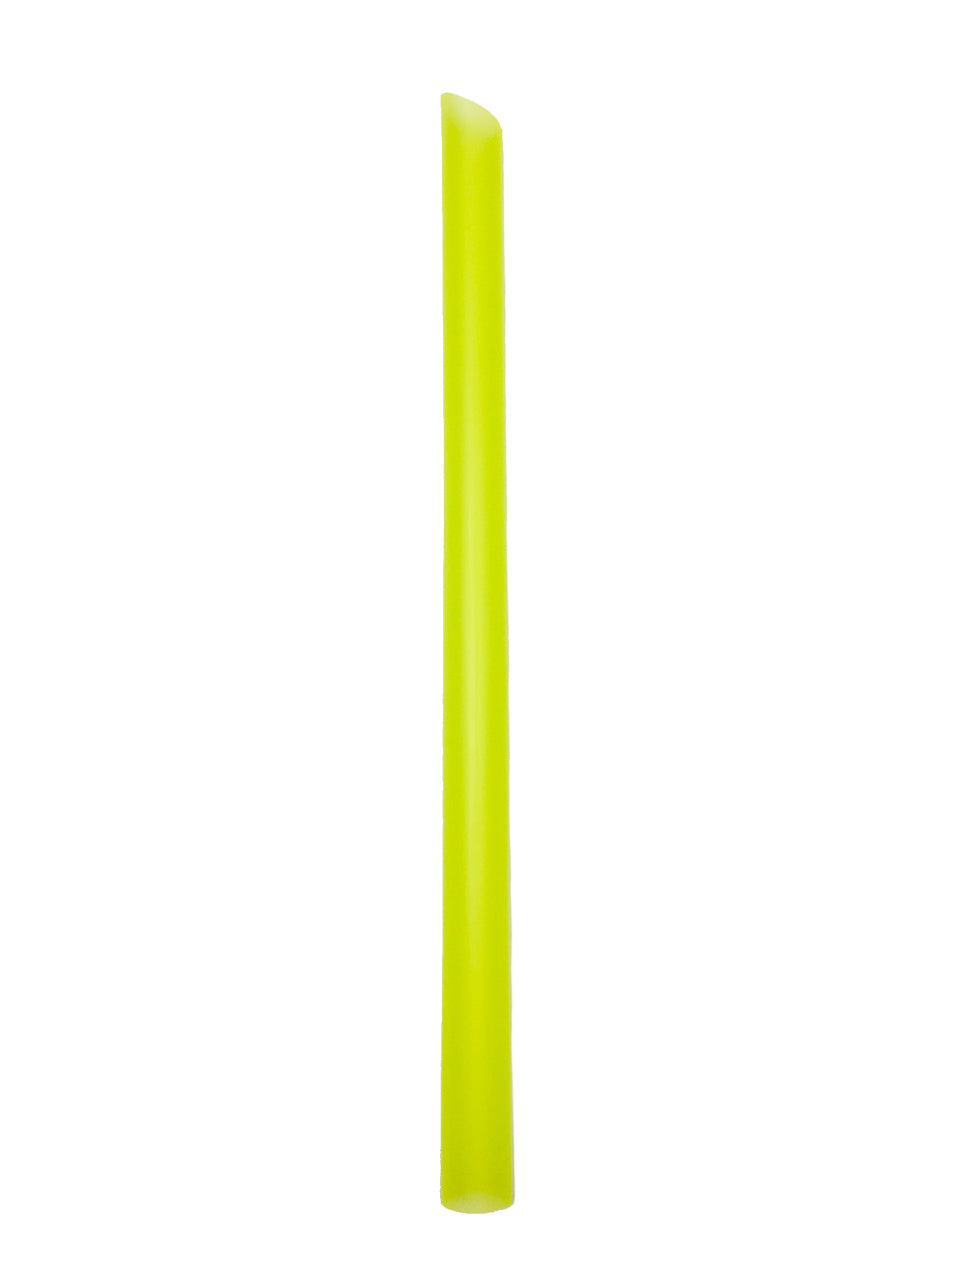 Plastic Straws 7.5'' Bubble Tea Straws (10mm) - Mixed Striped Colors 